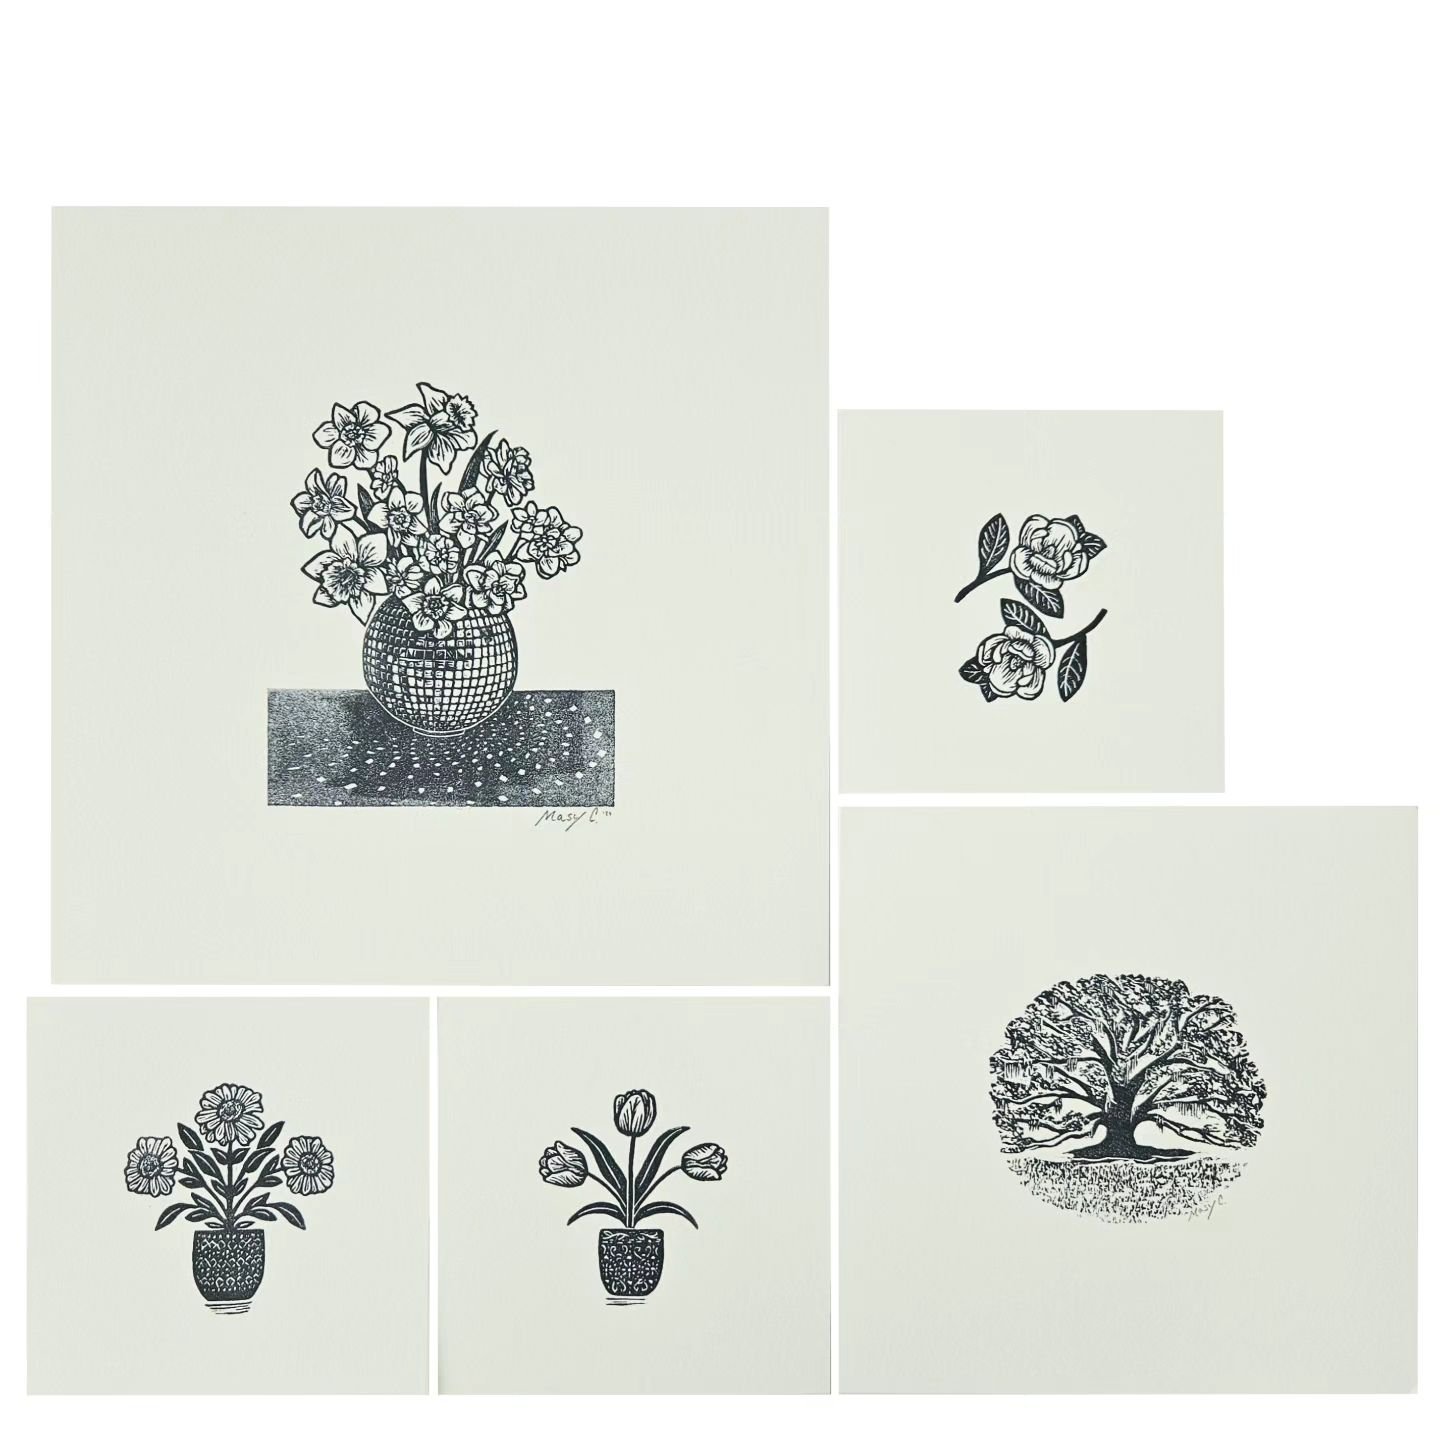 The mini print series is growing 🤗
.
.
.
#miniart #tinyart #miniprint #reliefprint #handcarvedstamp #blockprint #blockprinted #linogravure #lino #linoprint #tulipart #zinnia #oaktree #treeart #discoball #discoballdecor #magnolia #linocut #mymeaningf